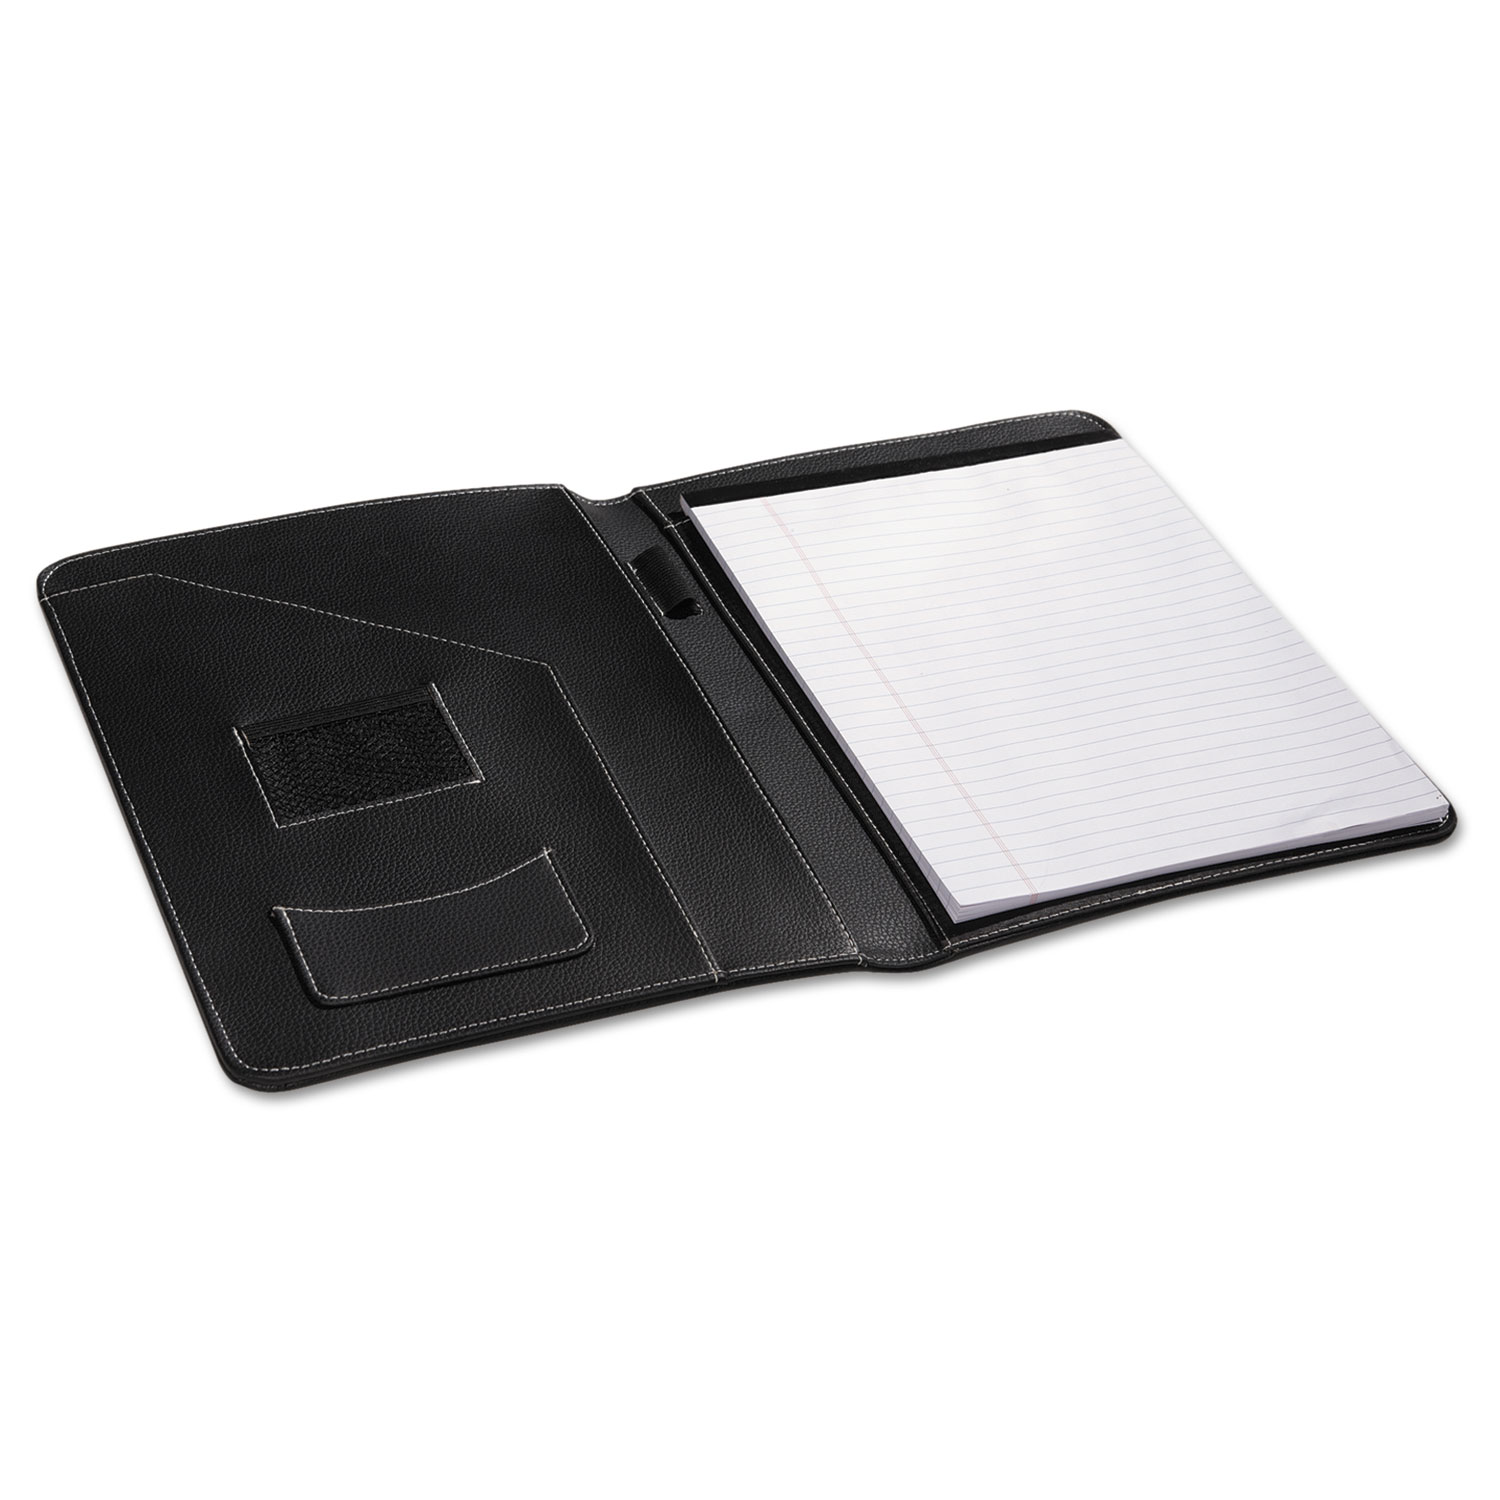 Leather-Look Pad Folio, Inside Flap Pocket w/Card Holder, Black